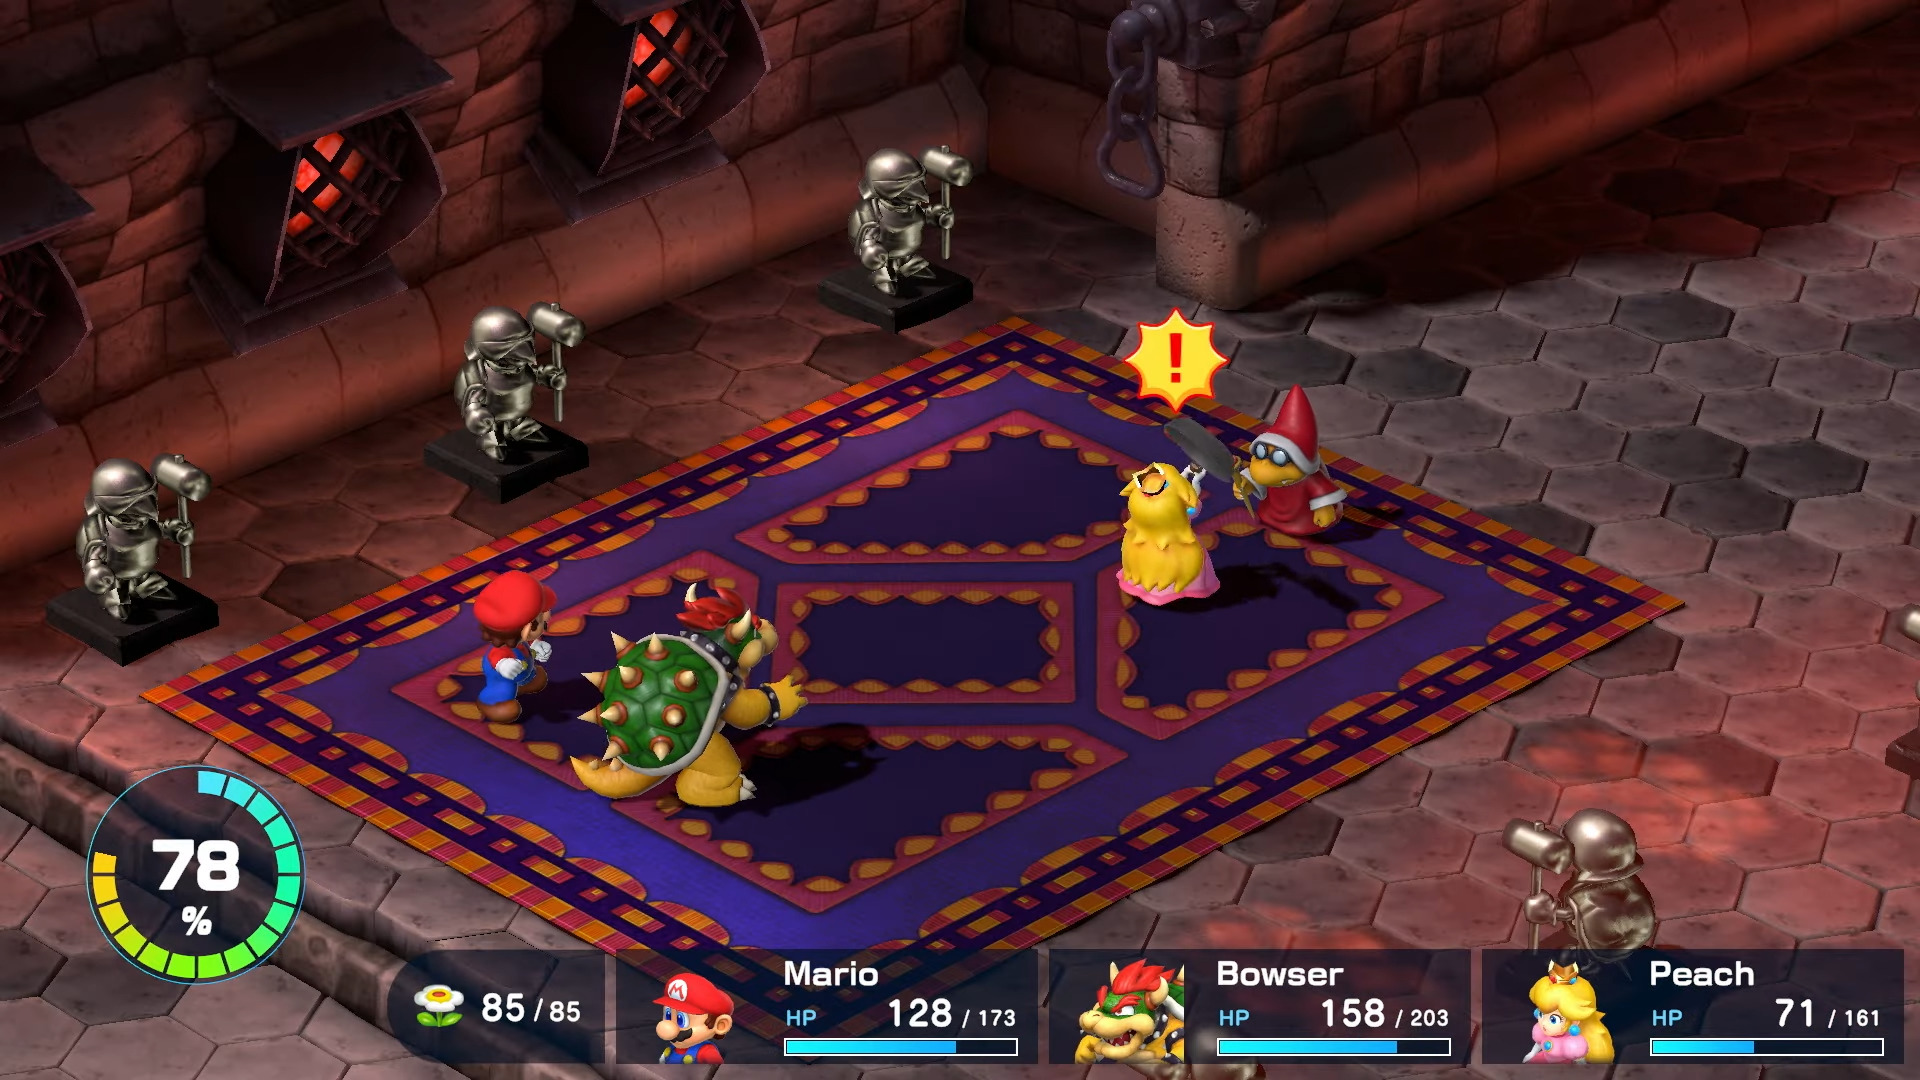 A screenshot from Super Mario RPG